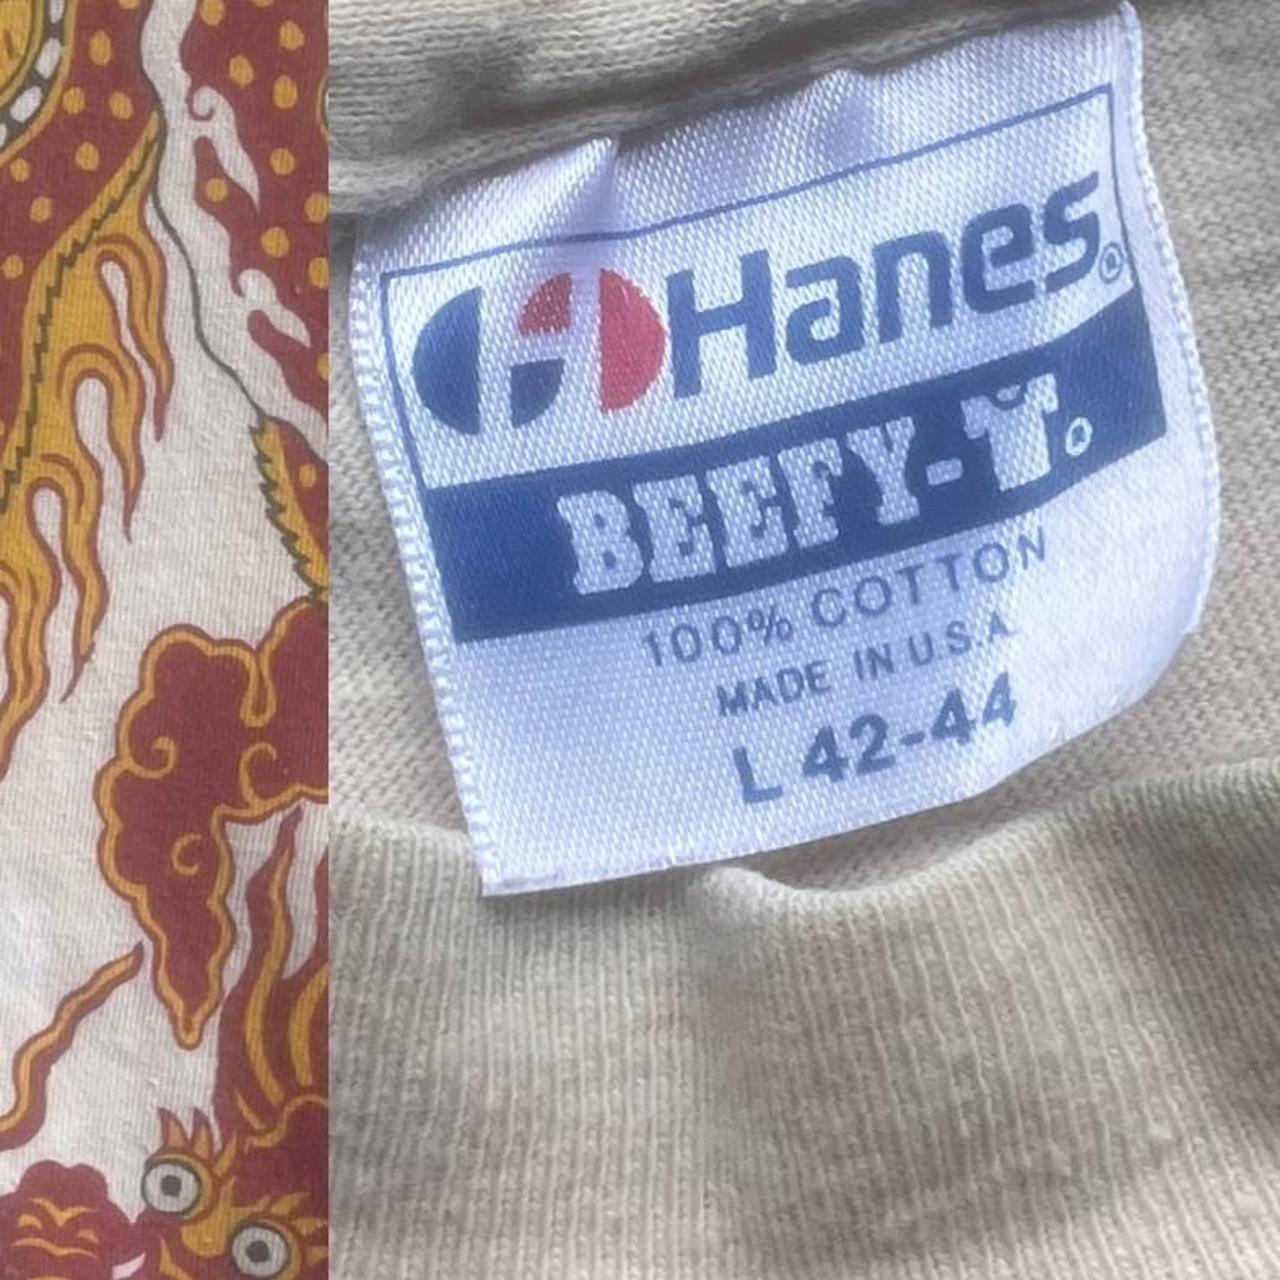 Brand new Hanes beefy shirt 1 for 10 #hanes #women's - Depop